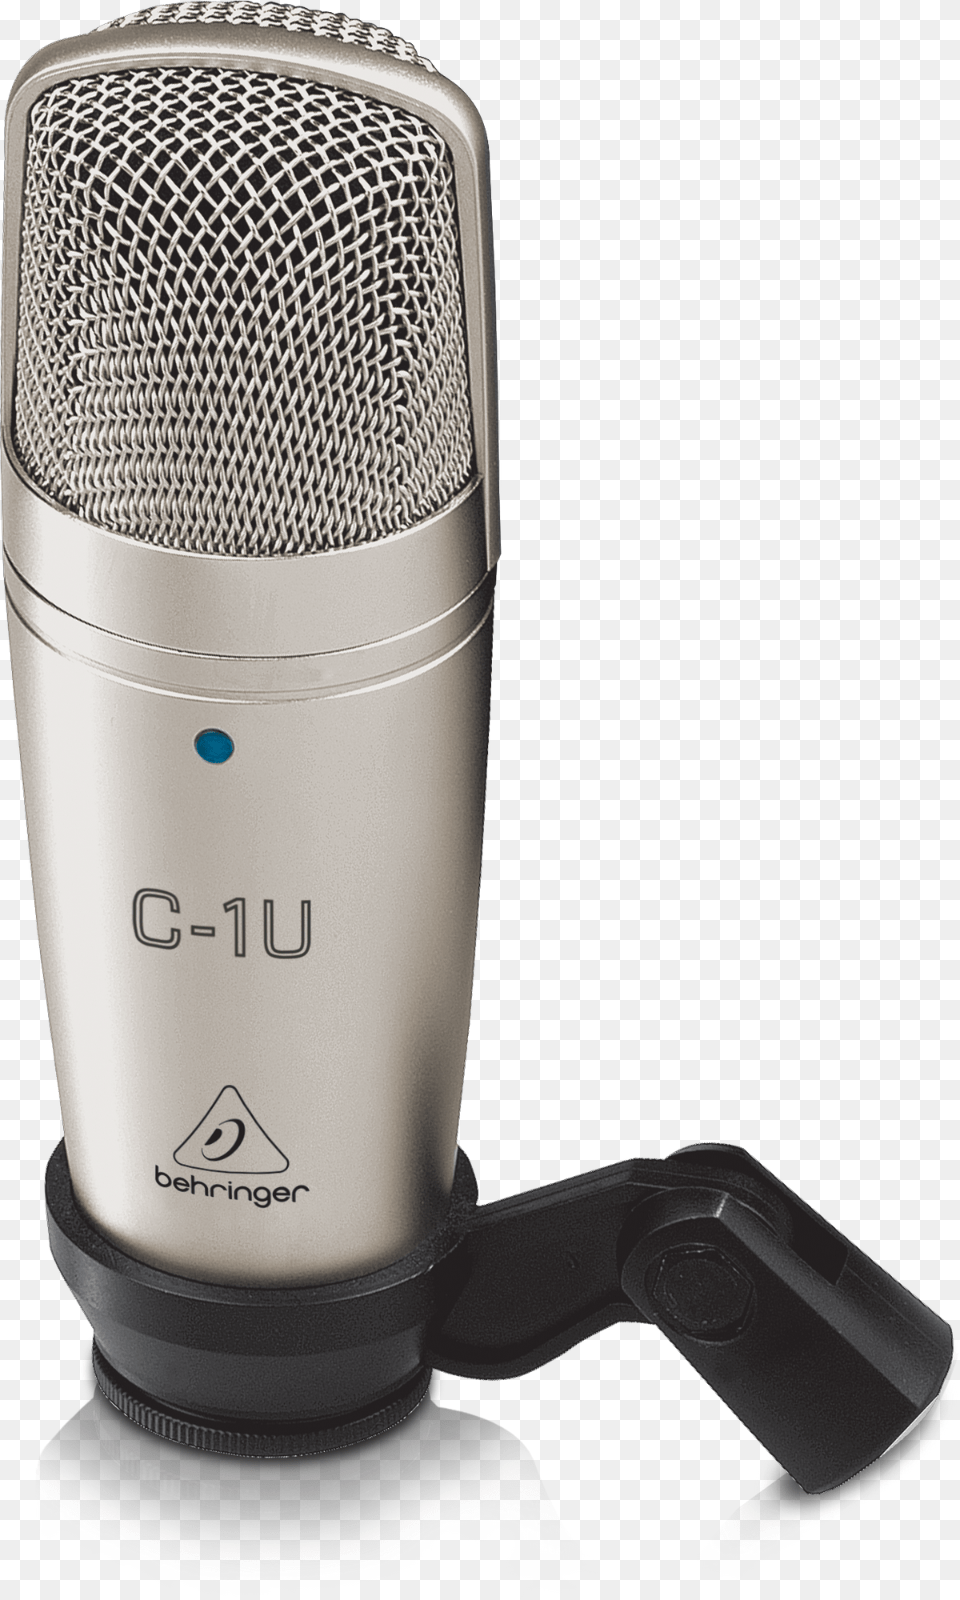 Behringer C 1u Usb Studio Condenser Microphone, Electrical Device Png Image